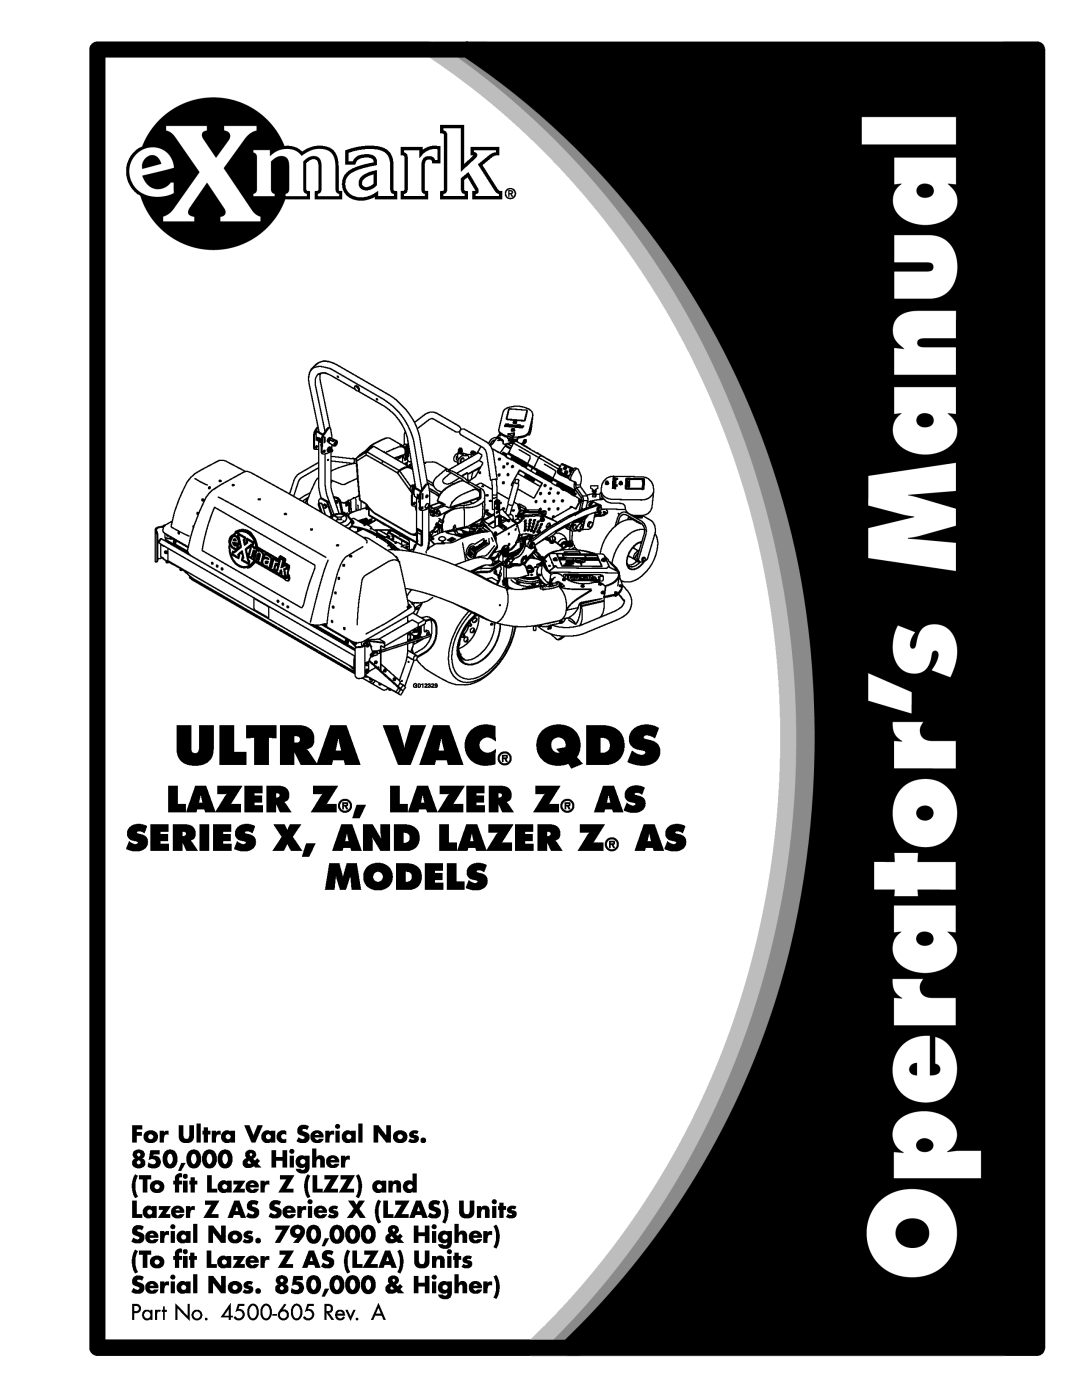 Exmark manual Quest Sp Models, For Serial Nos 850,000 & Higher, Part No. 4500-582Rev. A 